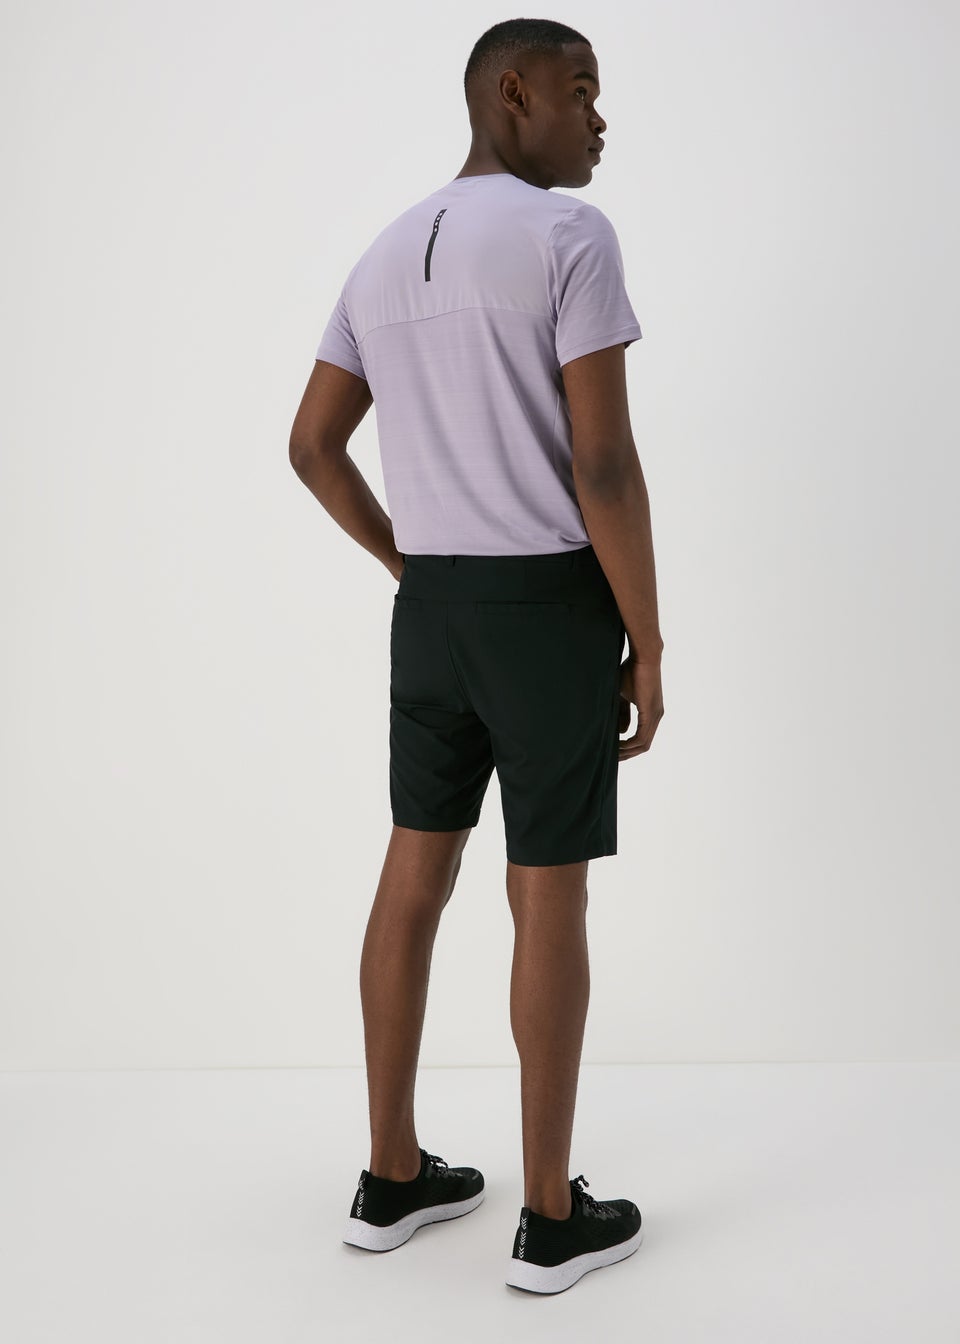 Black Golf Shorts